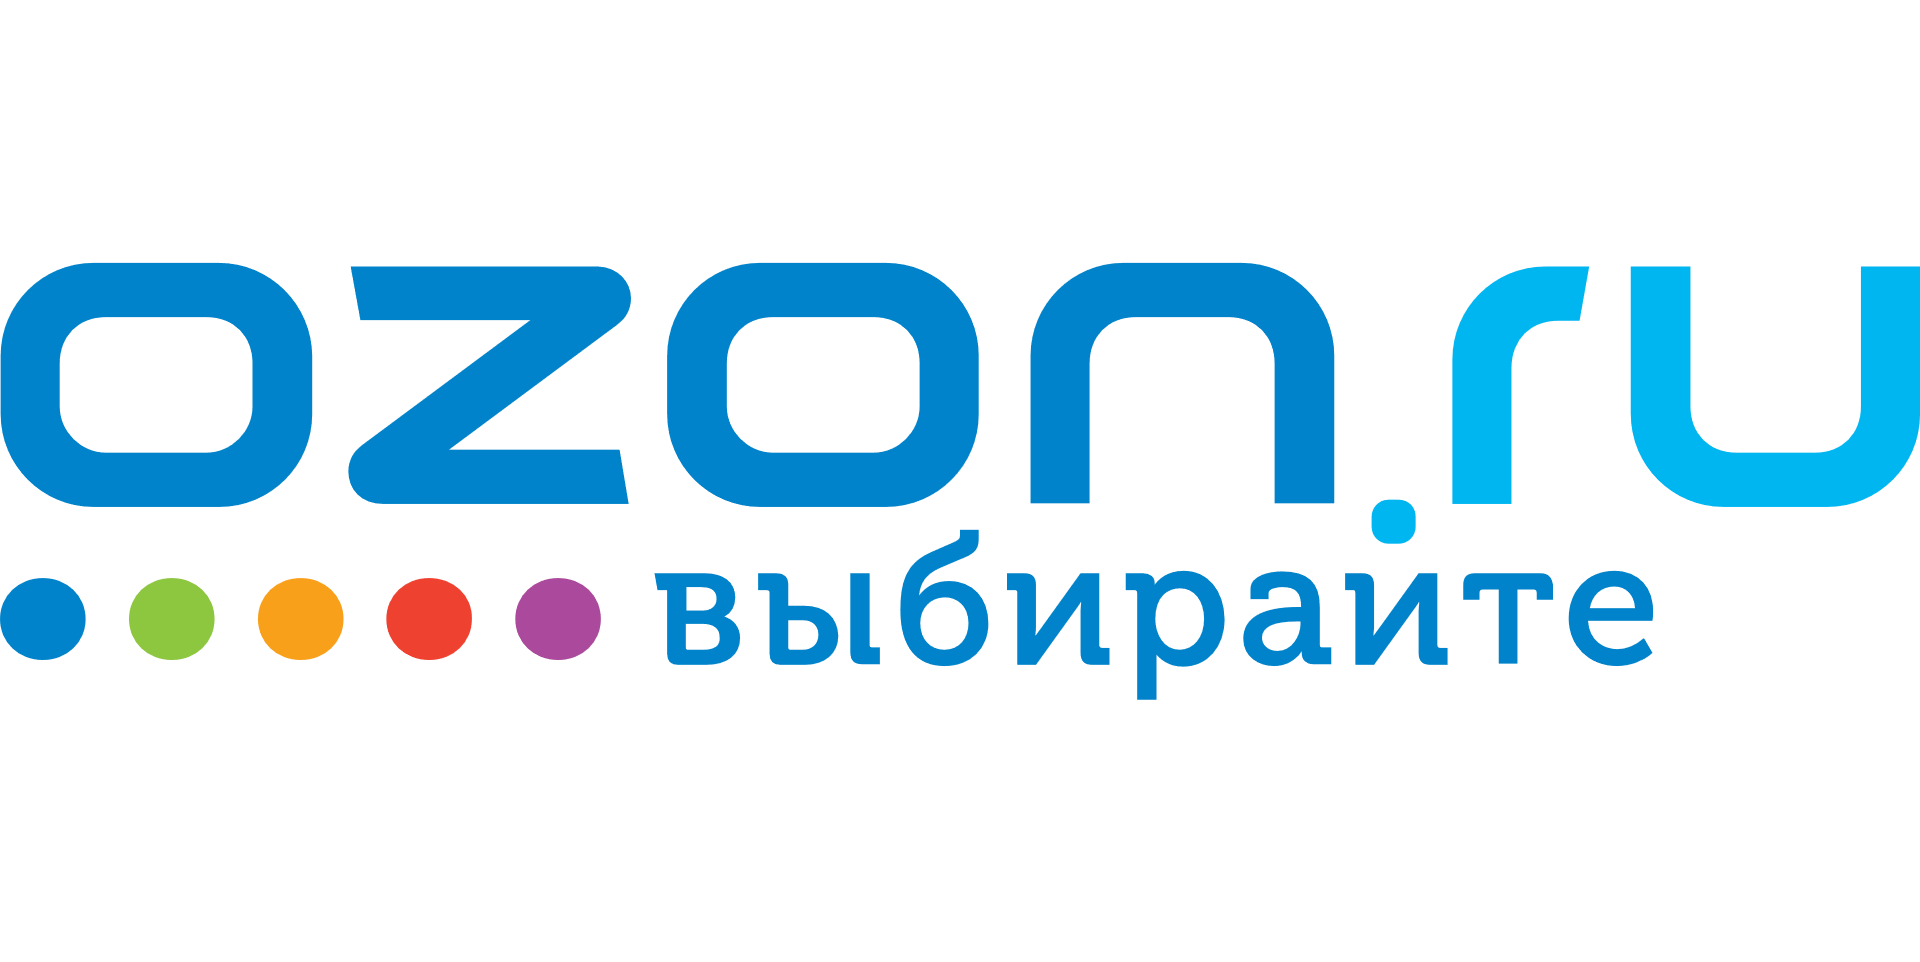 Т д озон. Озон логотип. Озон интернет-магазин. Озон логотип 2021. Озон новый логотип.